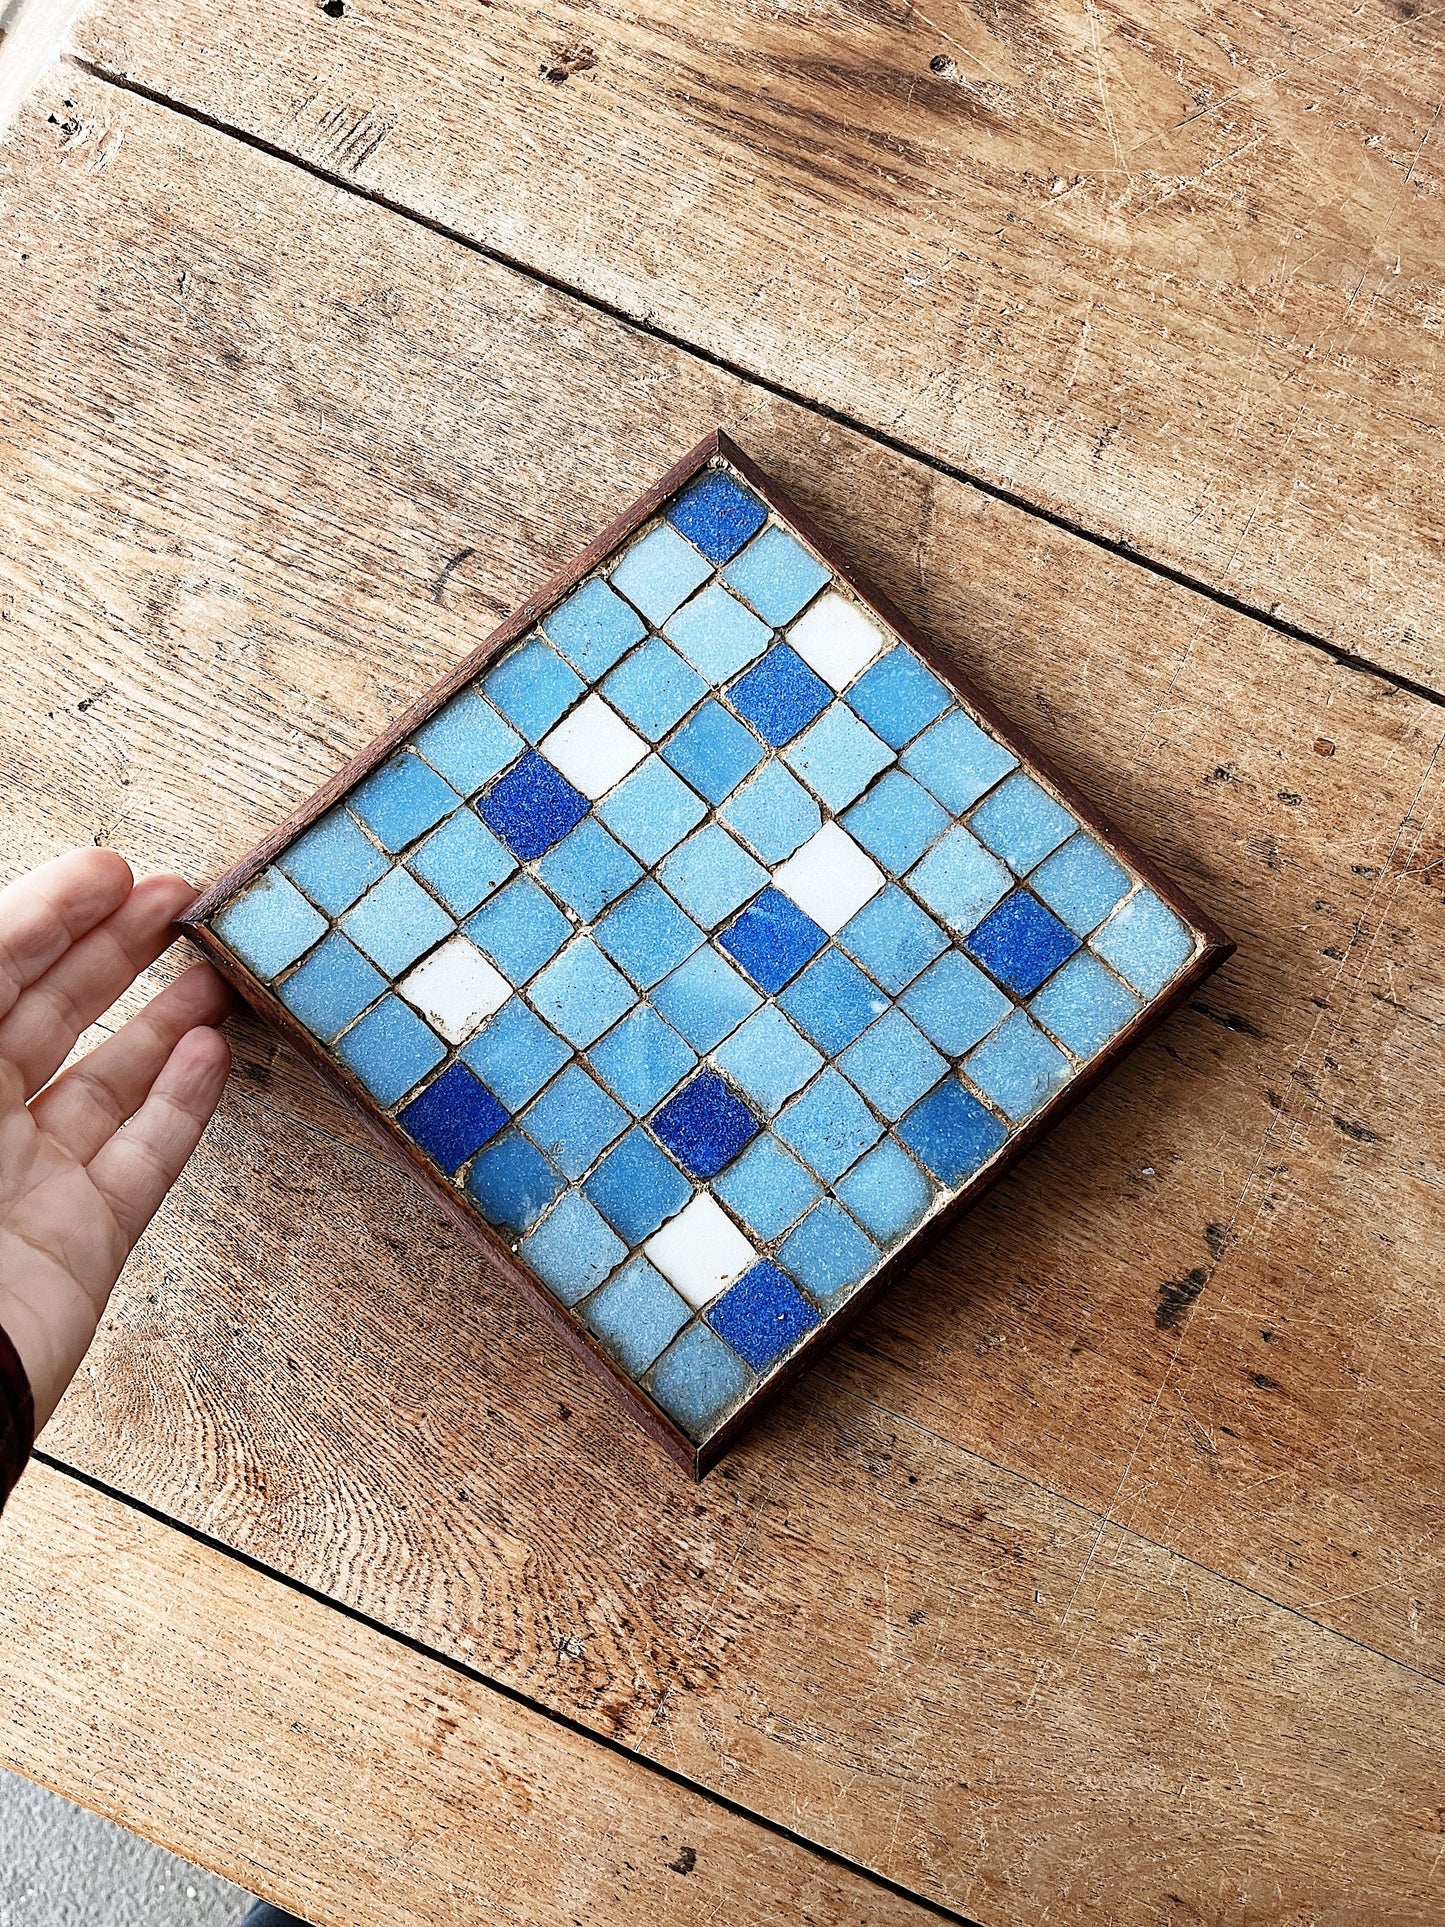 Vintage Tile Mosaic Trivet